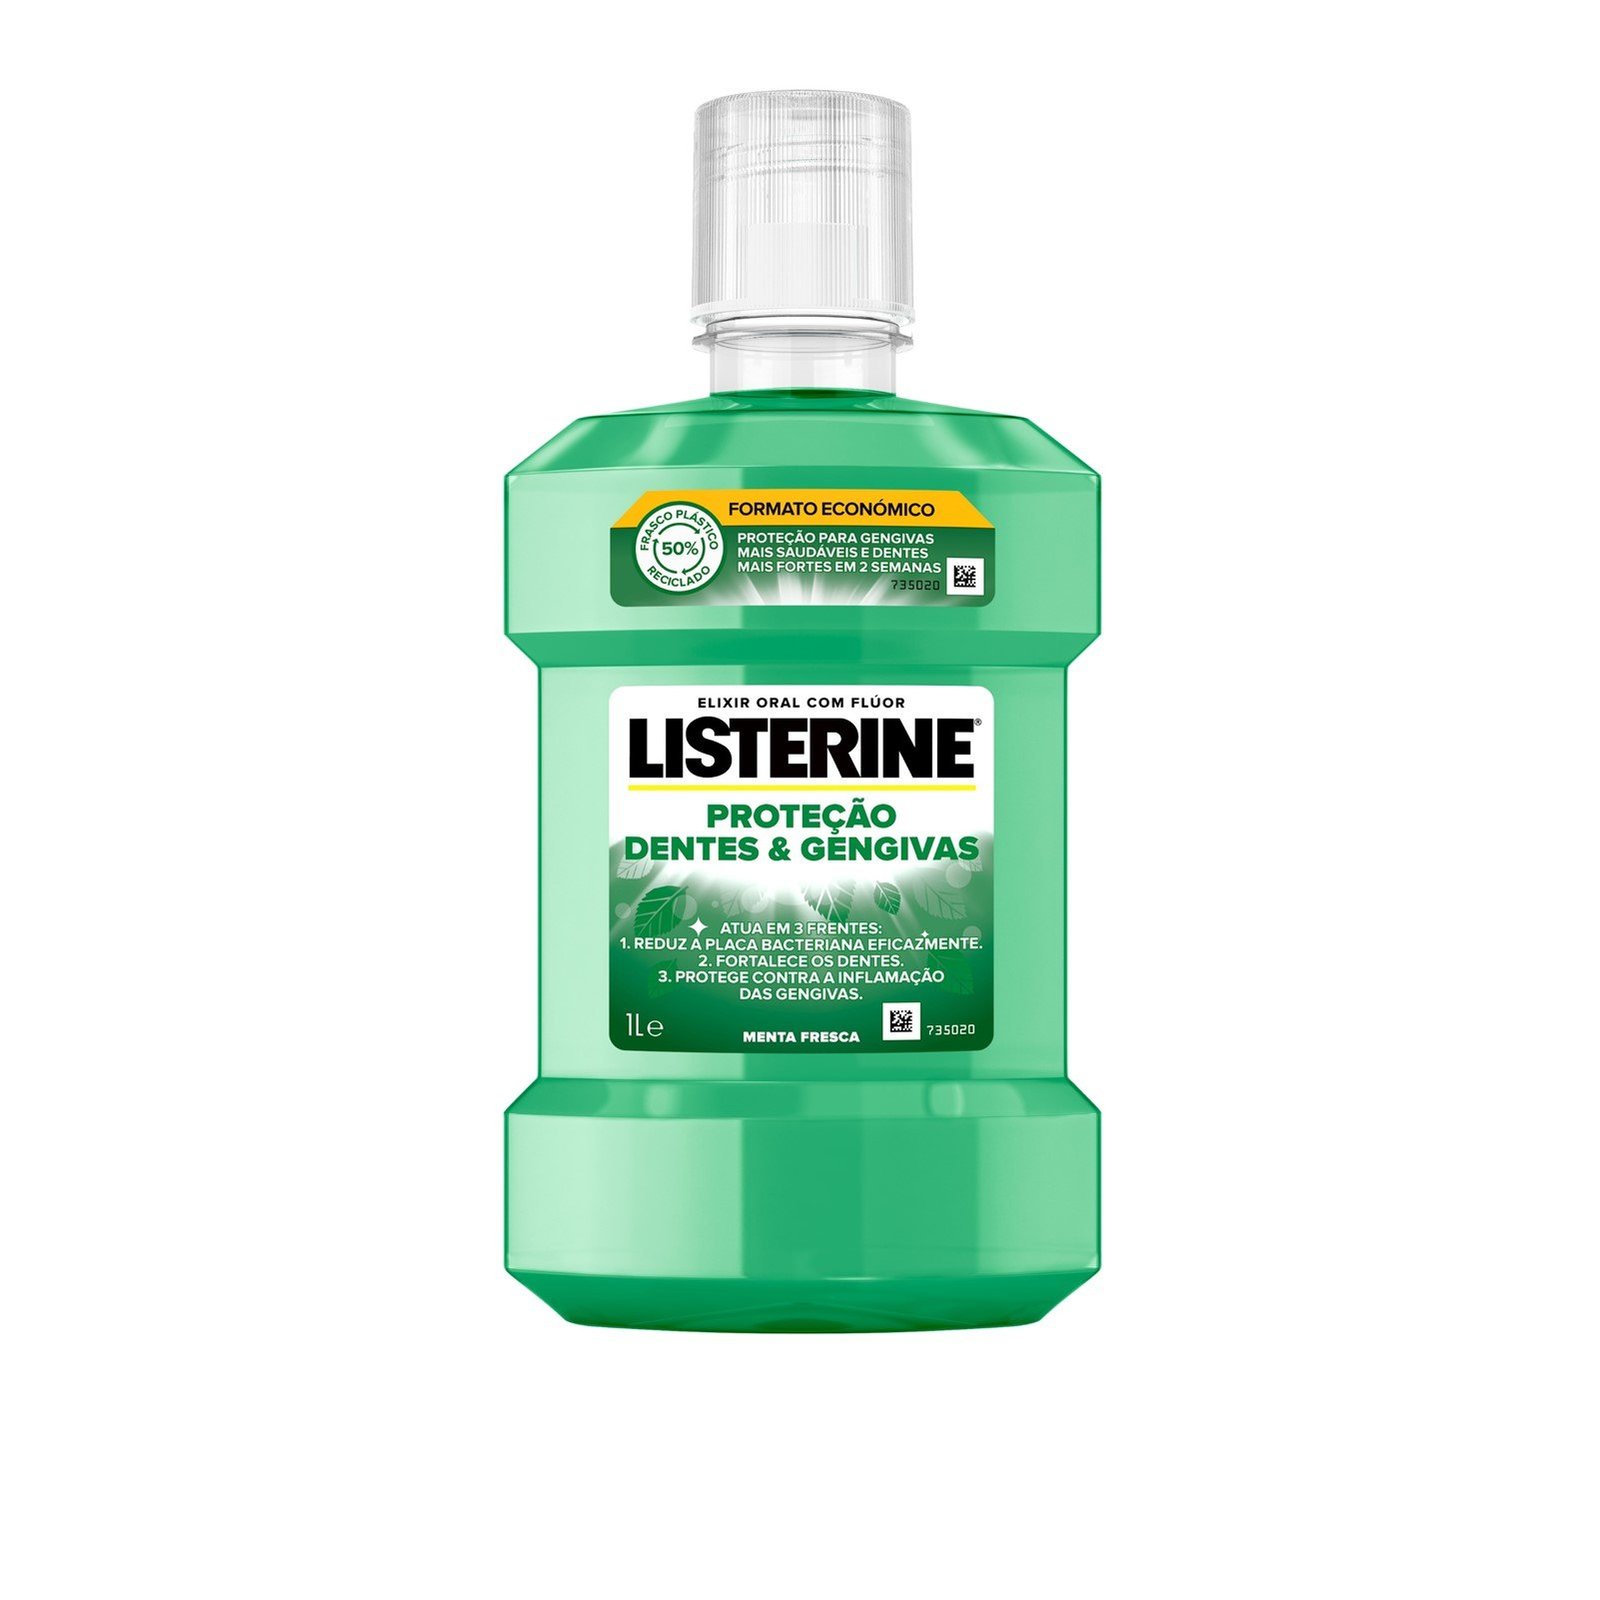 Listerine Teeth And Gum Protection Mouthwash 1L (33.8 fl oz)